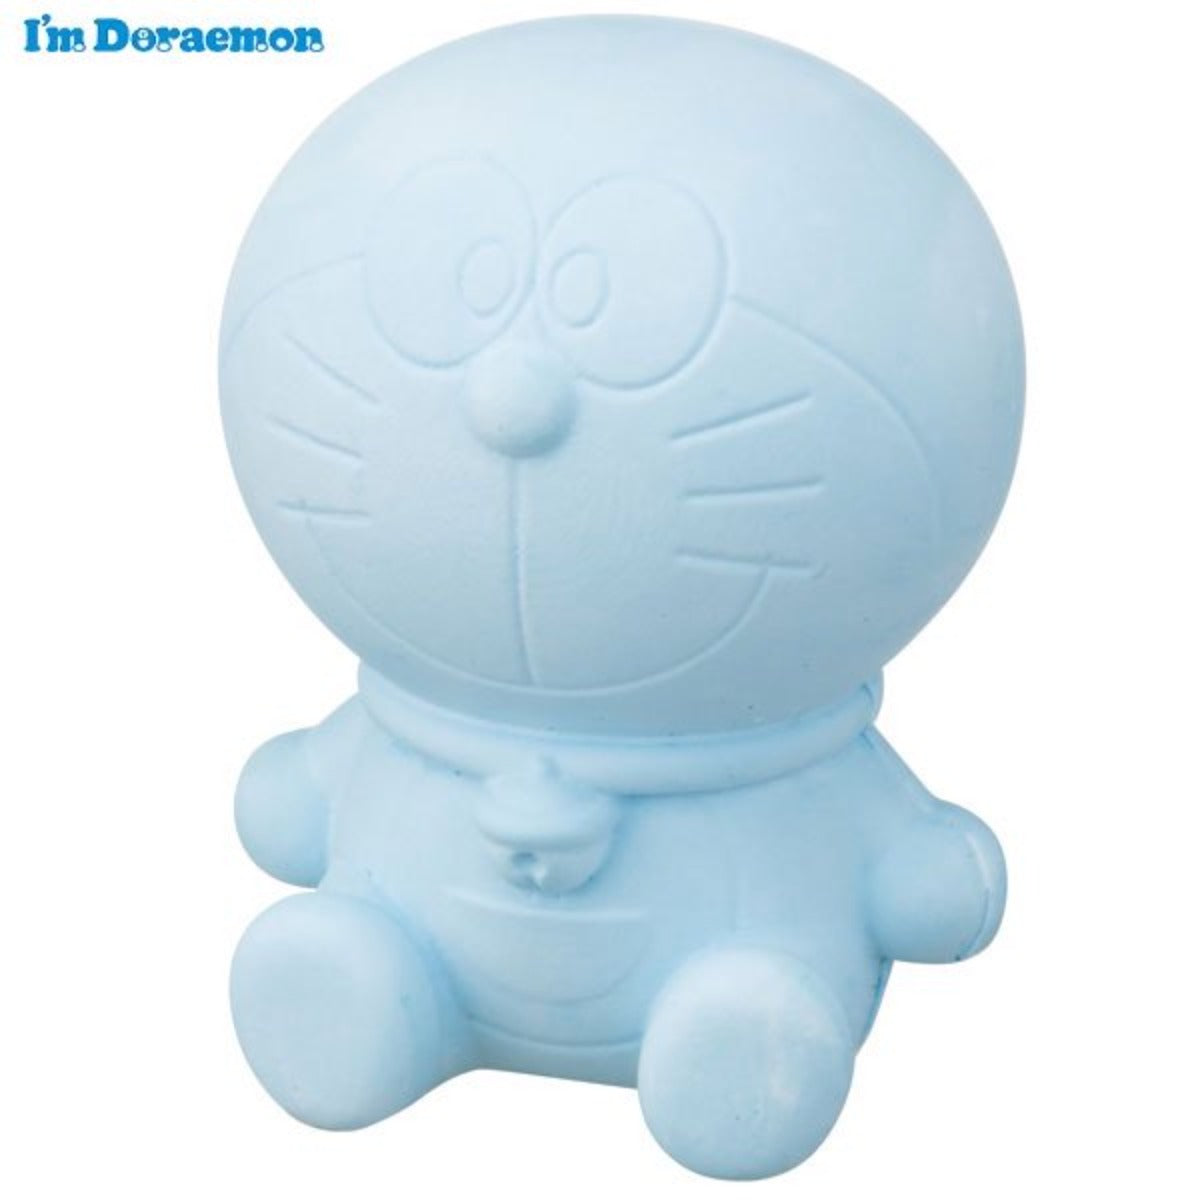 Diatomaceous Earth Deodorant - Doraemon  (Japan Edition)